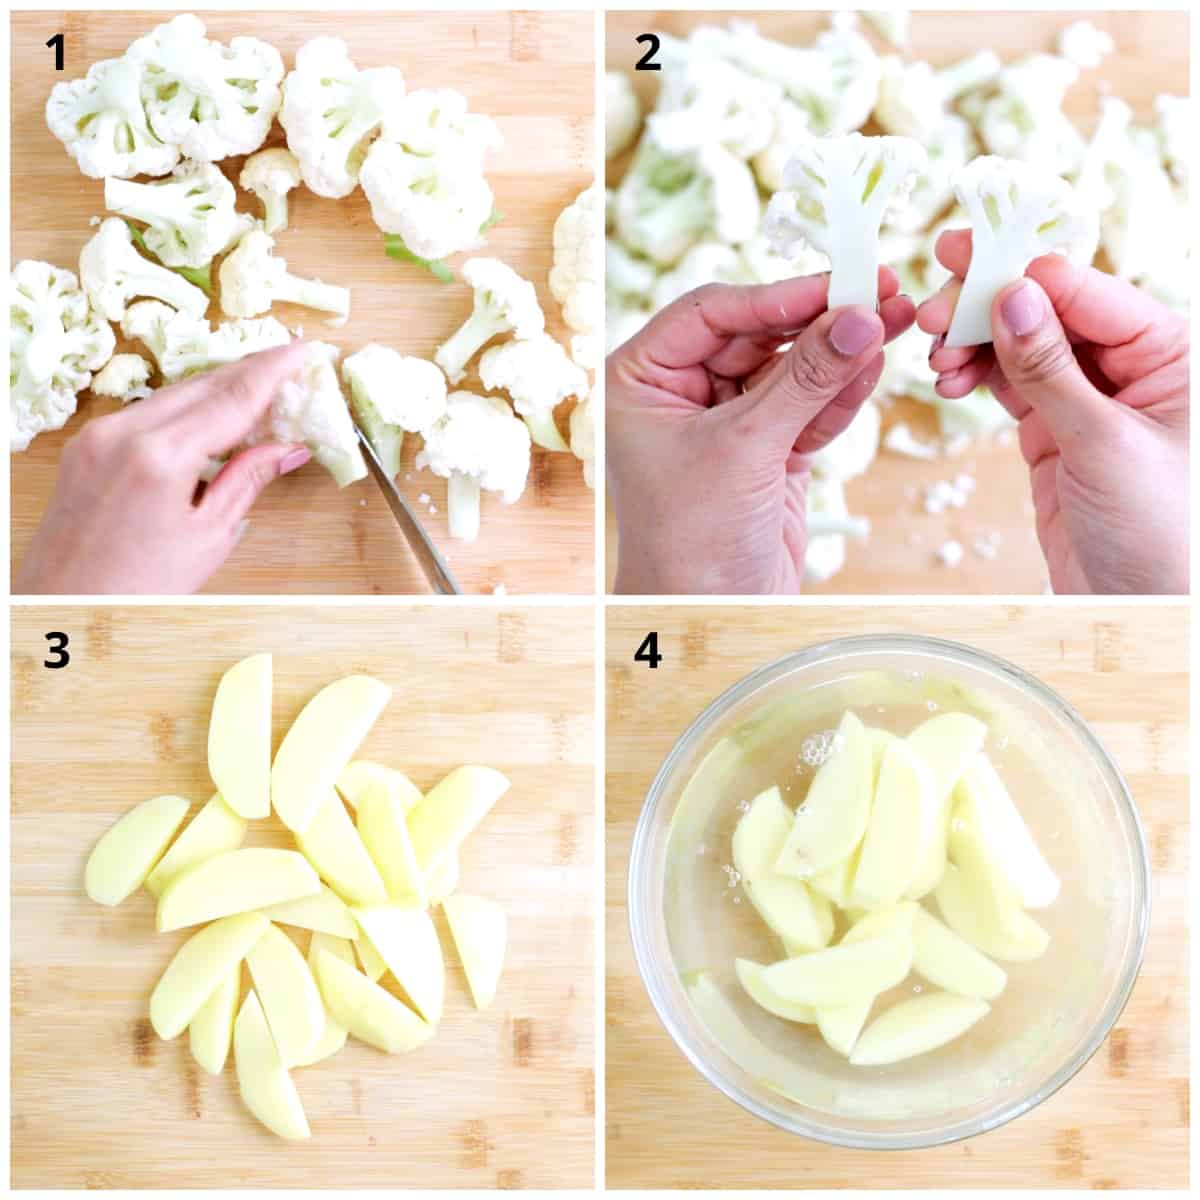 Steps for Chopping cauliflower and potato for aloo gobhi